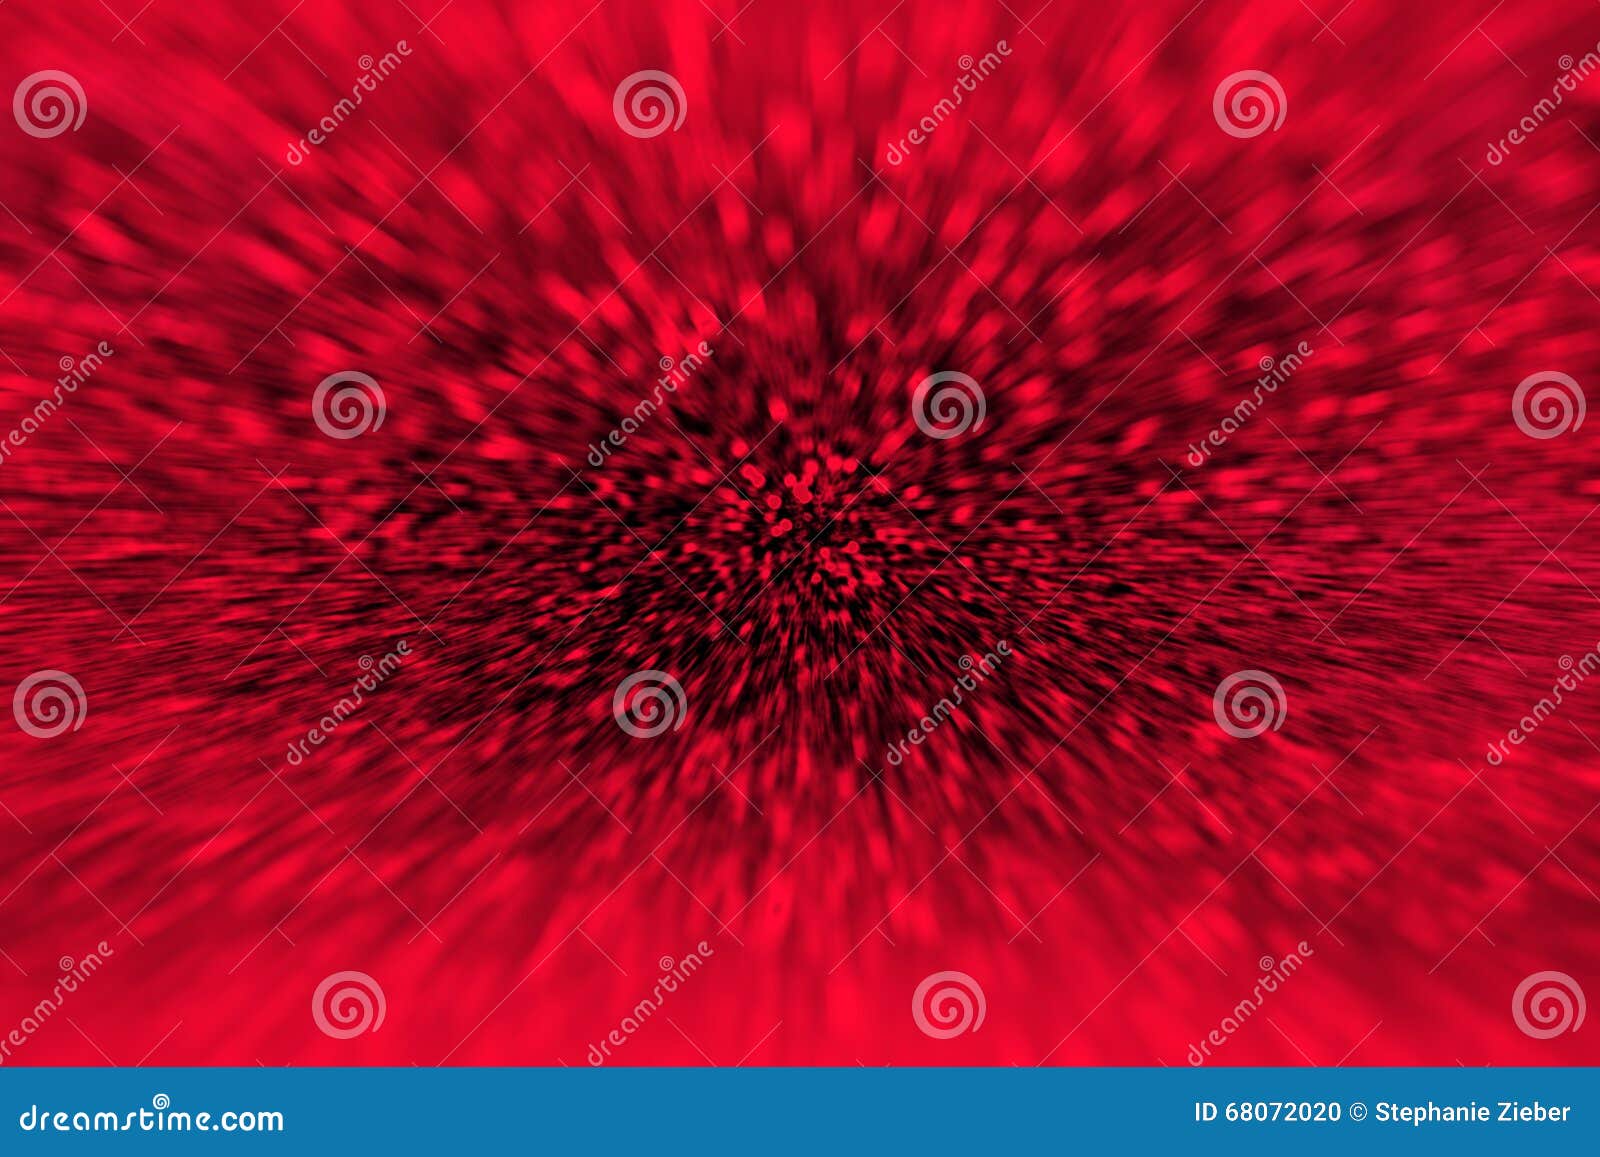 vascular red blood cells